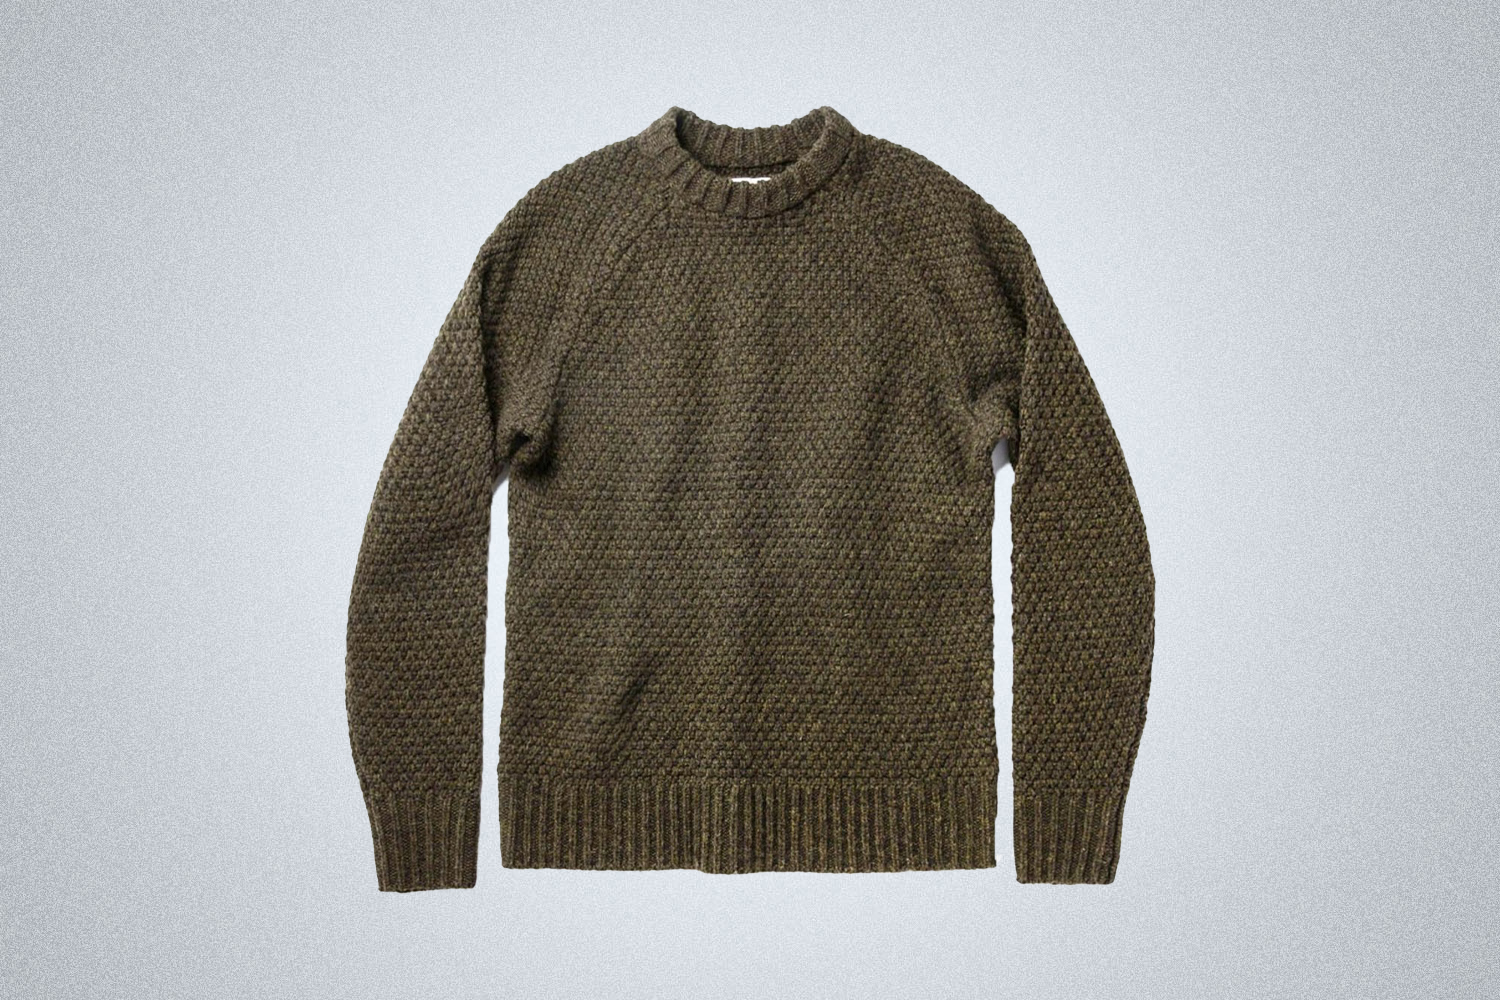 Taylor Stitch The Wharf Sweater